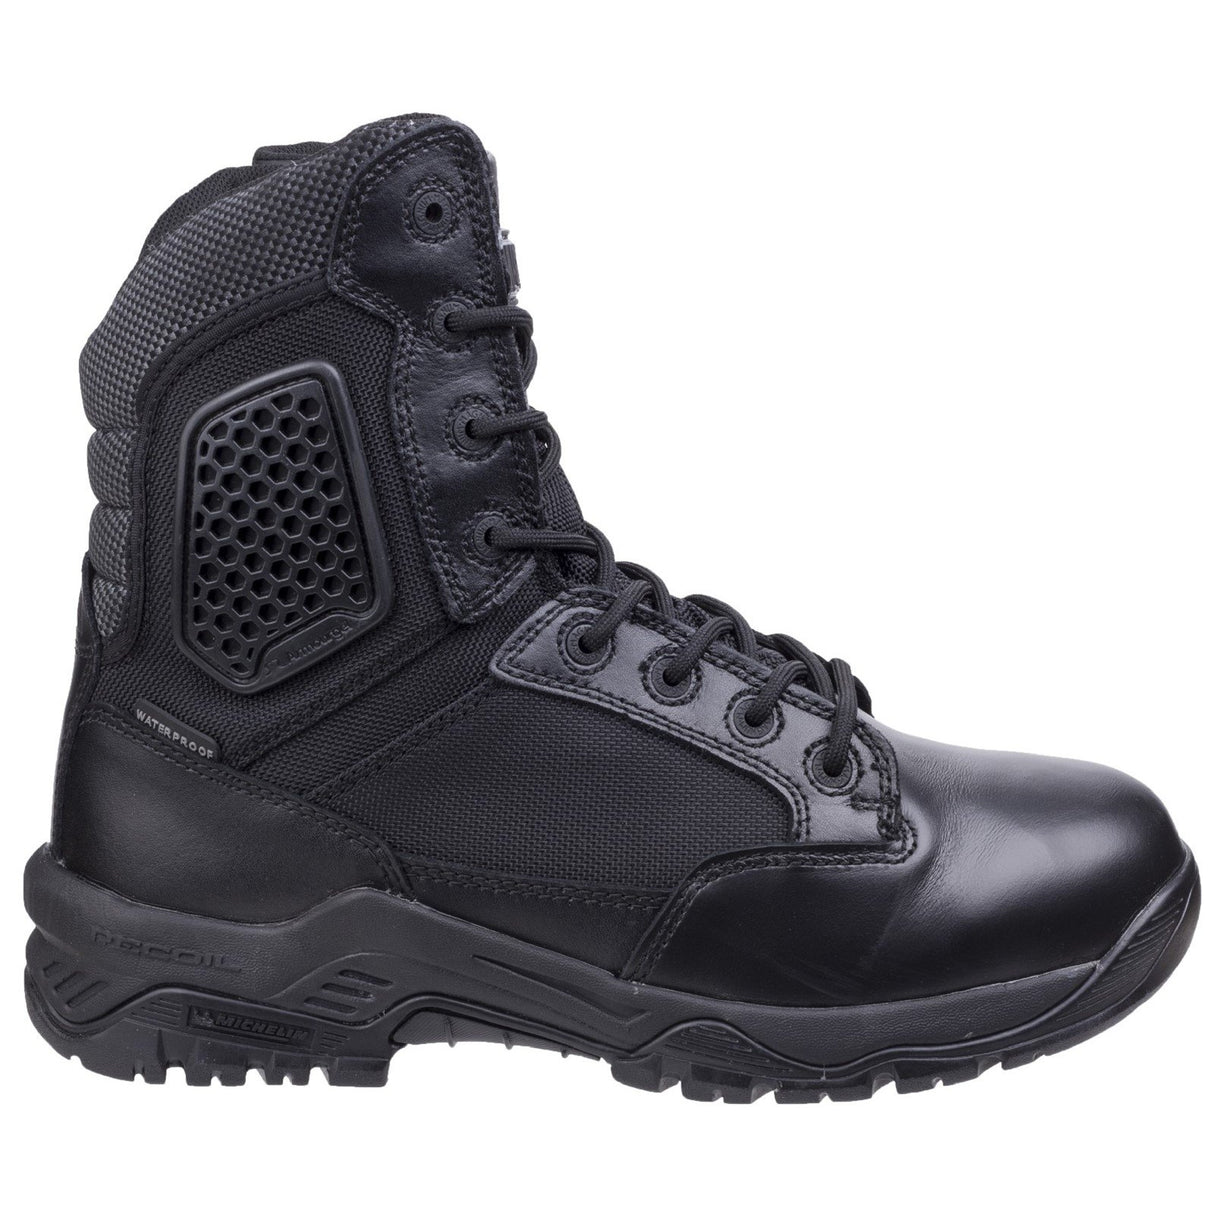 Magnum Strike Force 8.0 Safety Boots